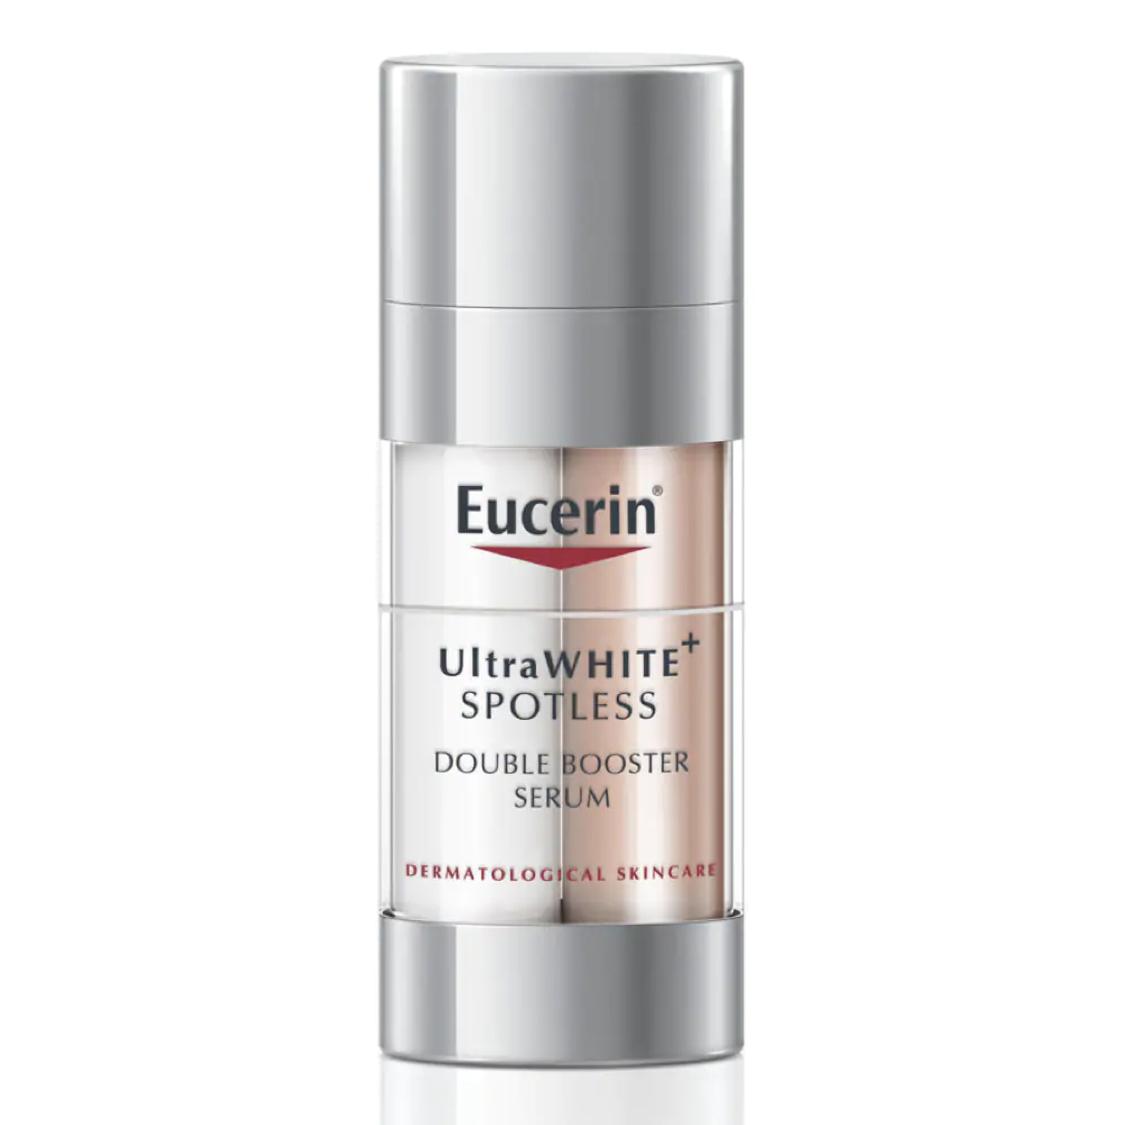 Eucerin Ultrawhite+ Spotless Double Booster Serum 30ml. ยูเซอรีน อัลตร้าไวท์ พลัส สปอตเลส ดับเบิ้ล บูสเตอร์ เซรั่ม